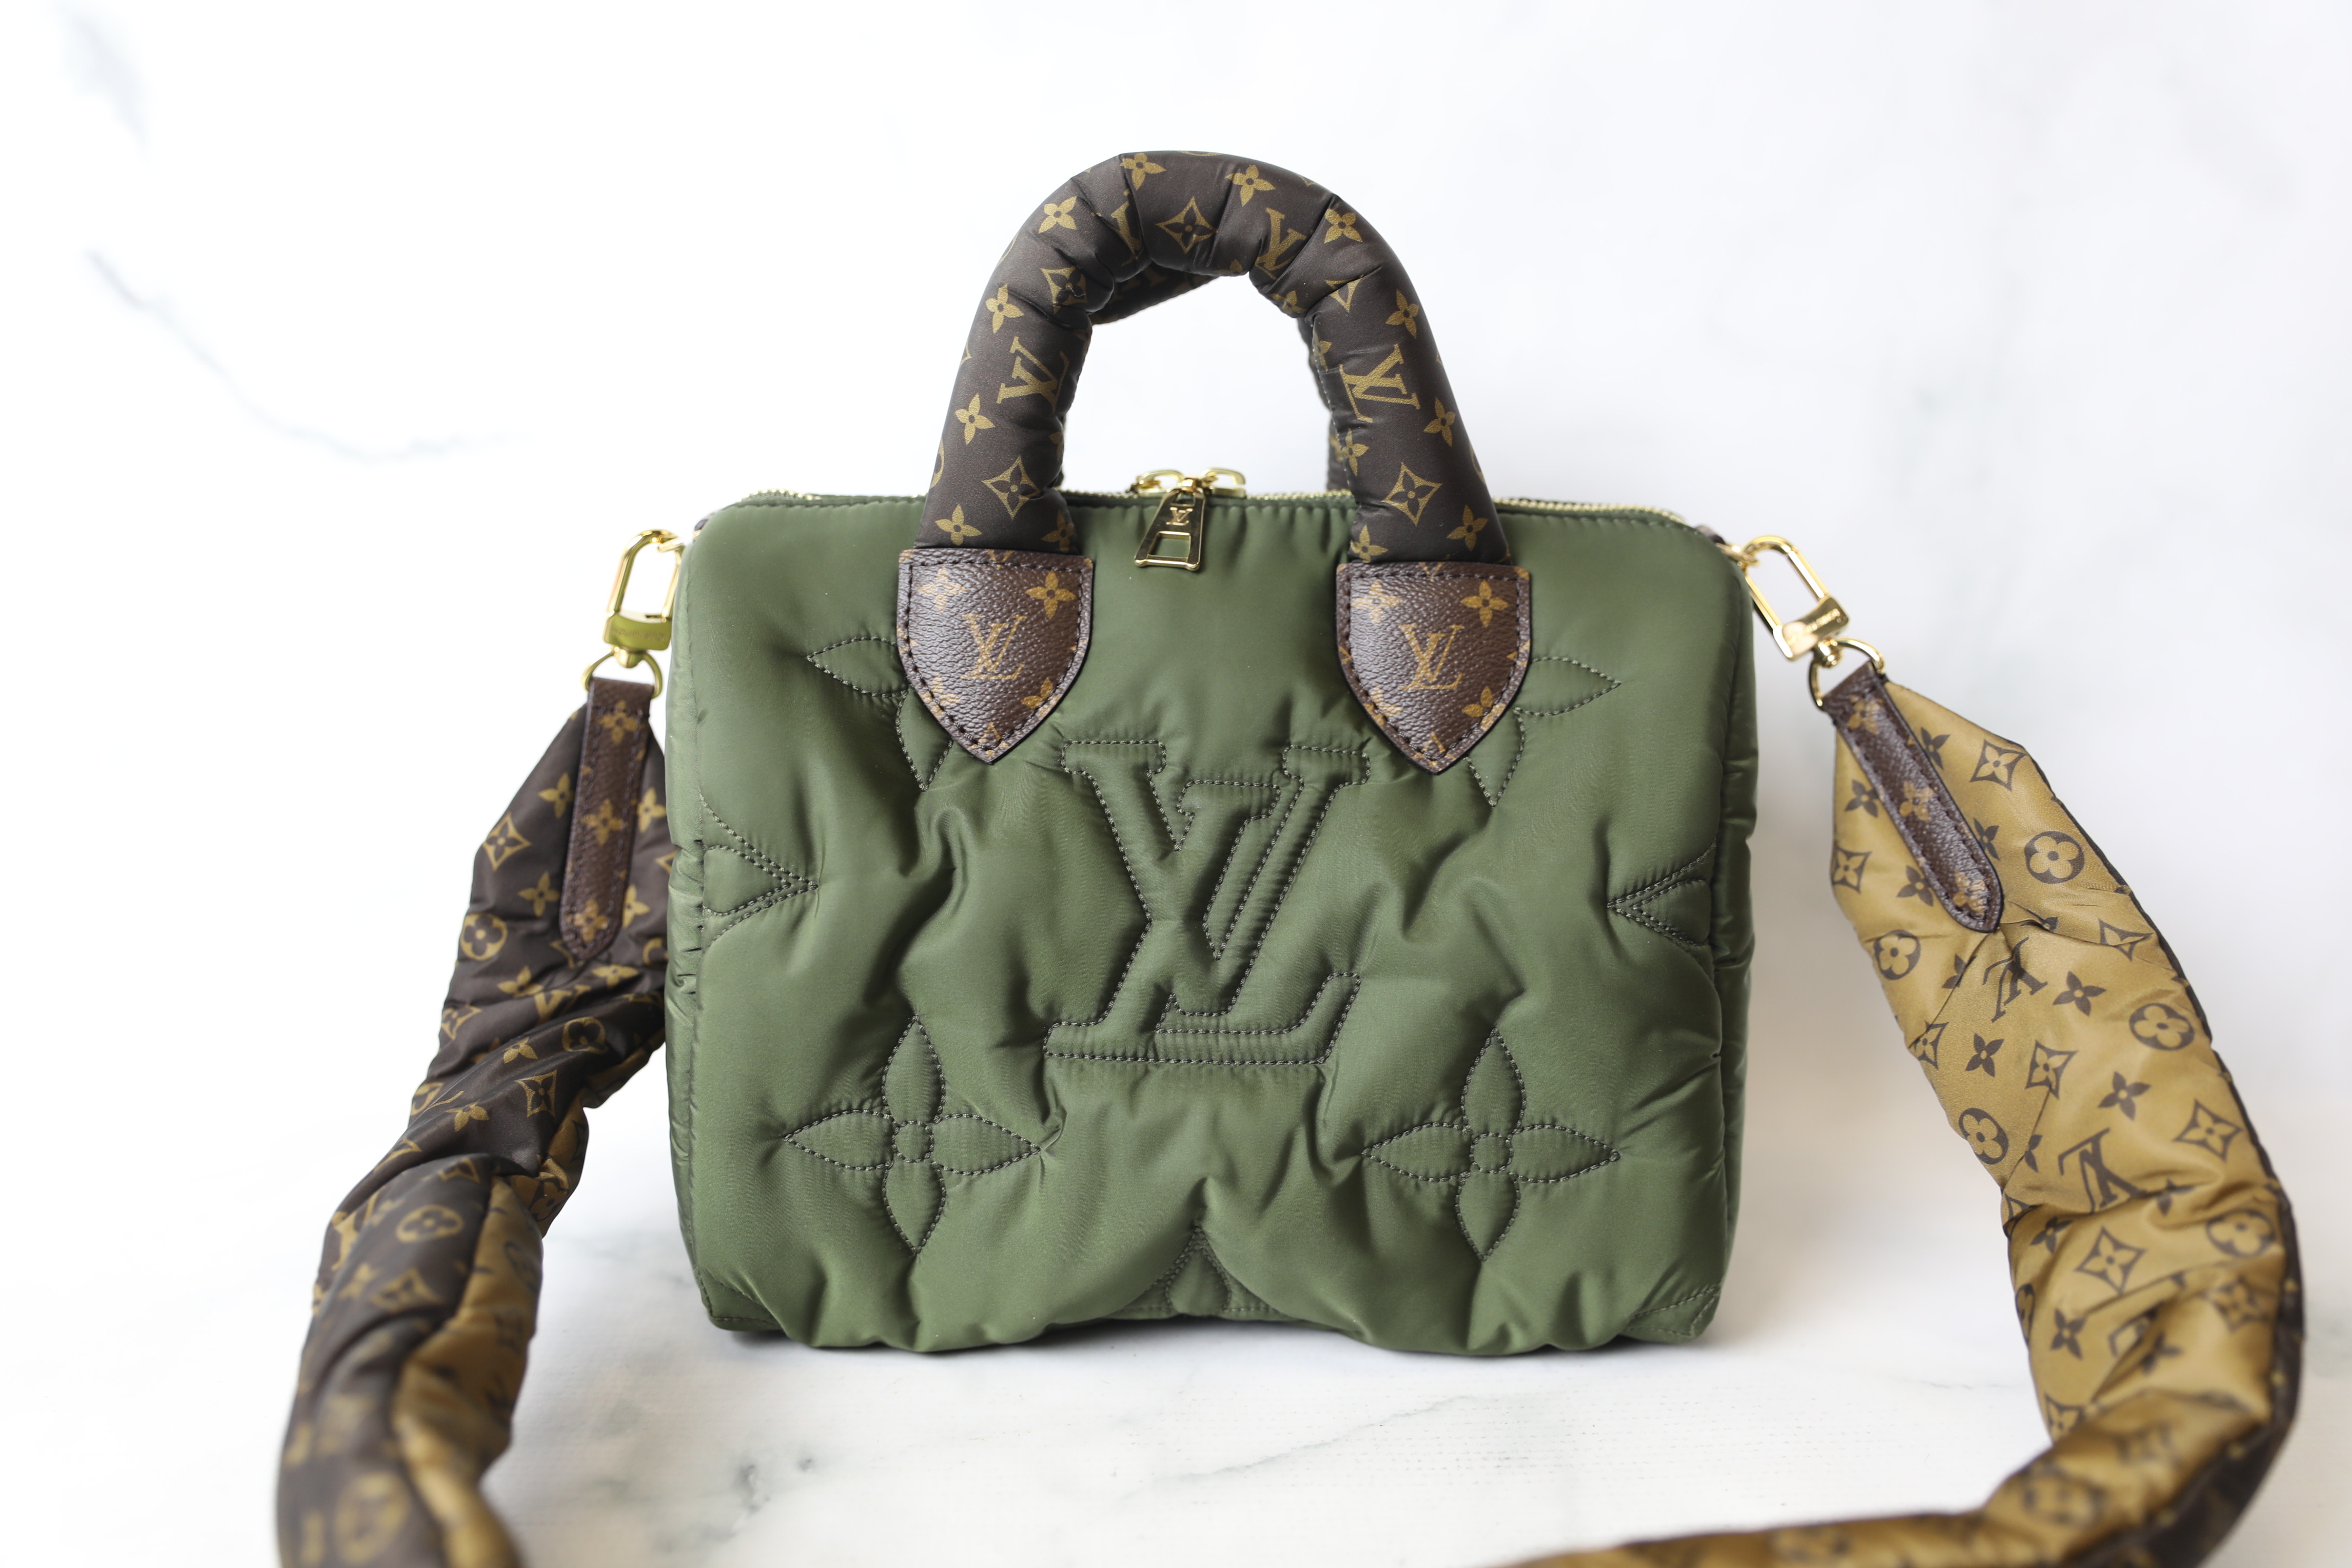 Louis Vuitton Speedy 25 Puffer Bag, Monogram Top Handle, New in